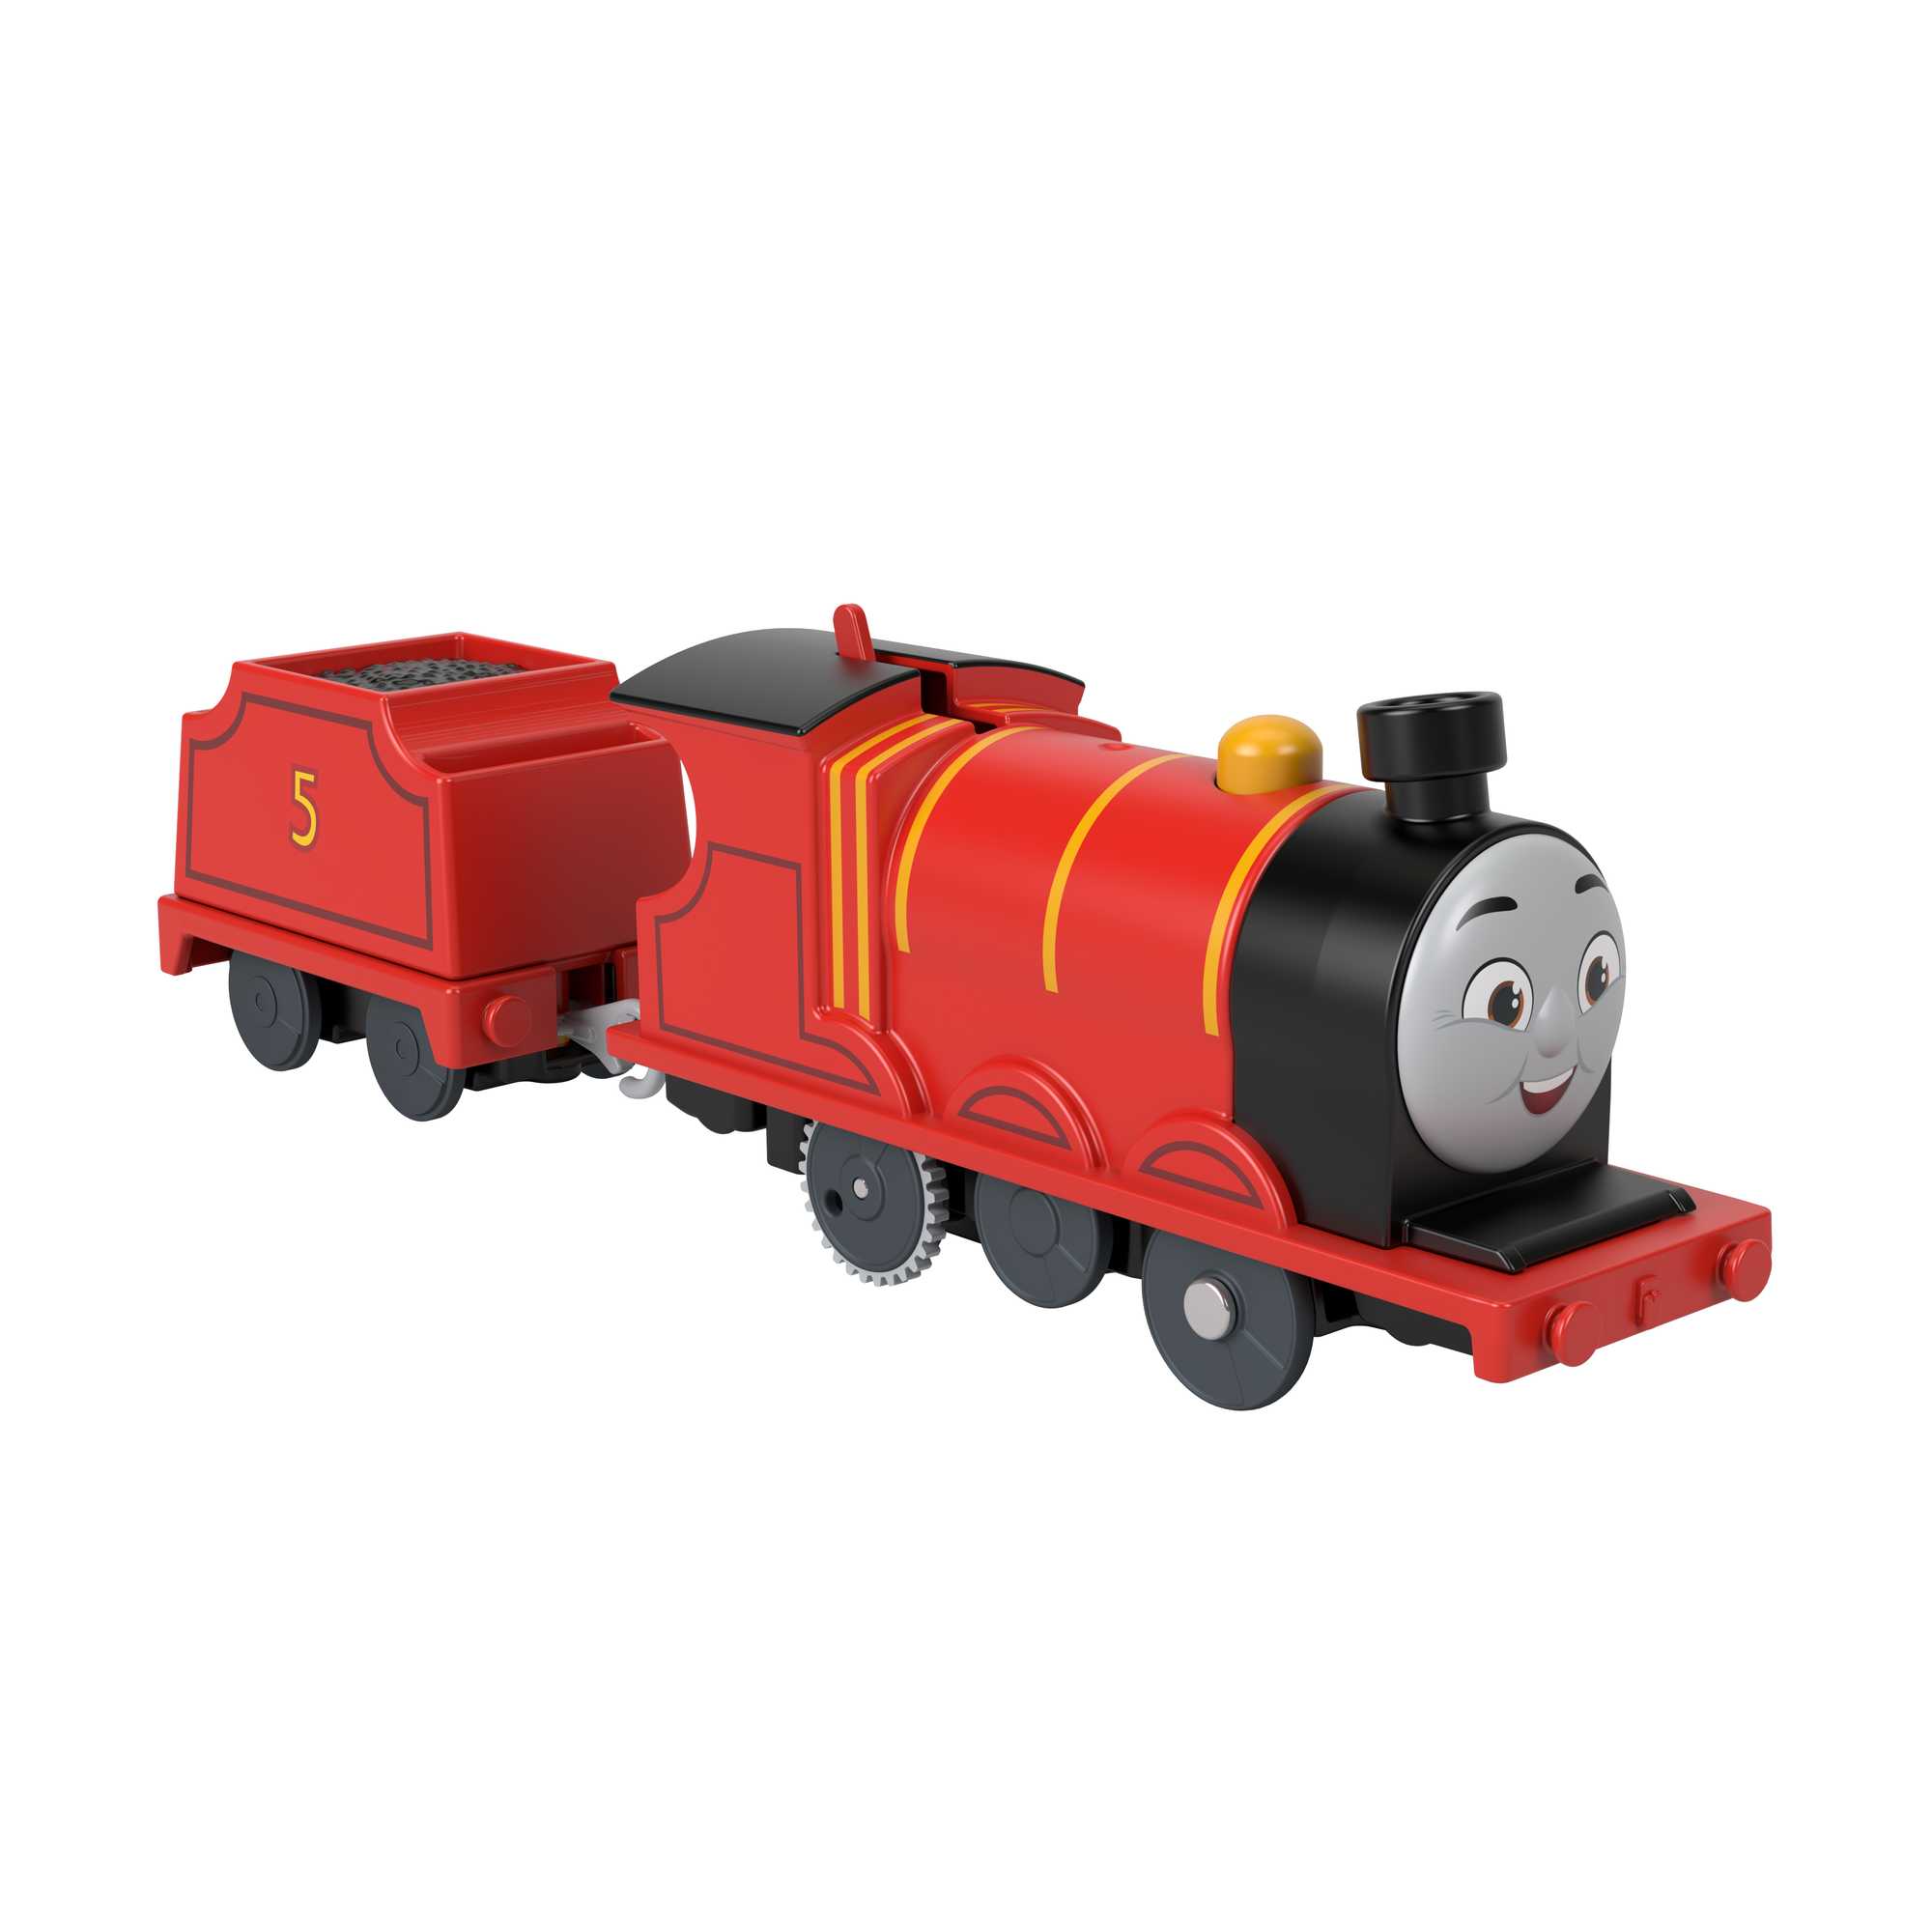 Thomas Engine Adventures - Thomas & Friends: James (Thomas Engine